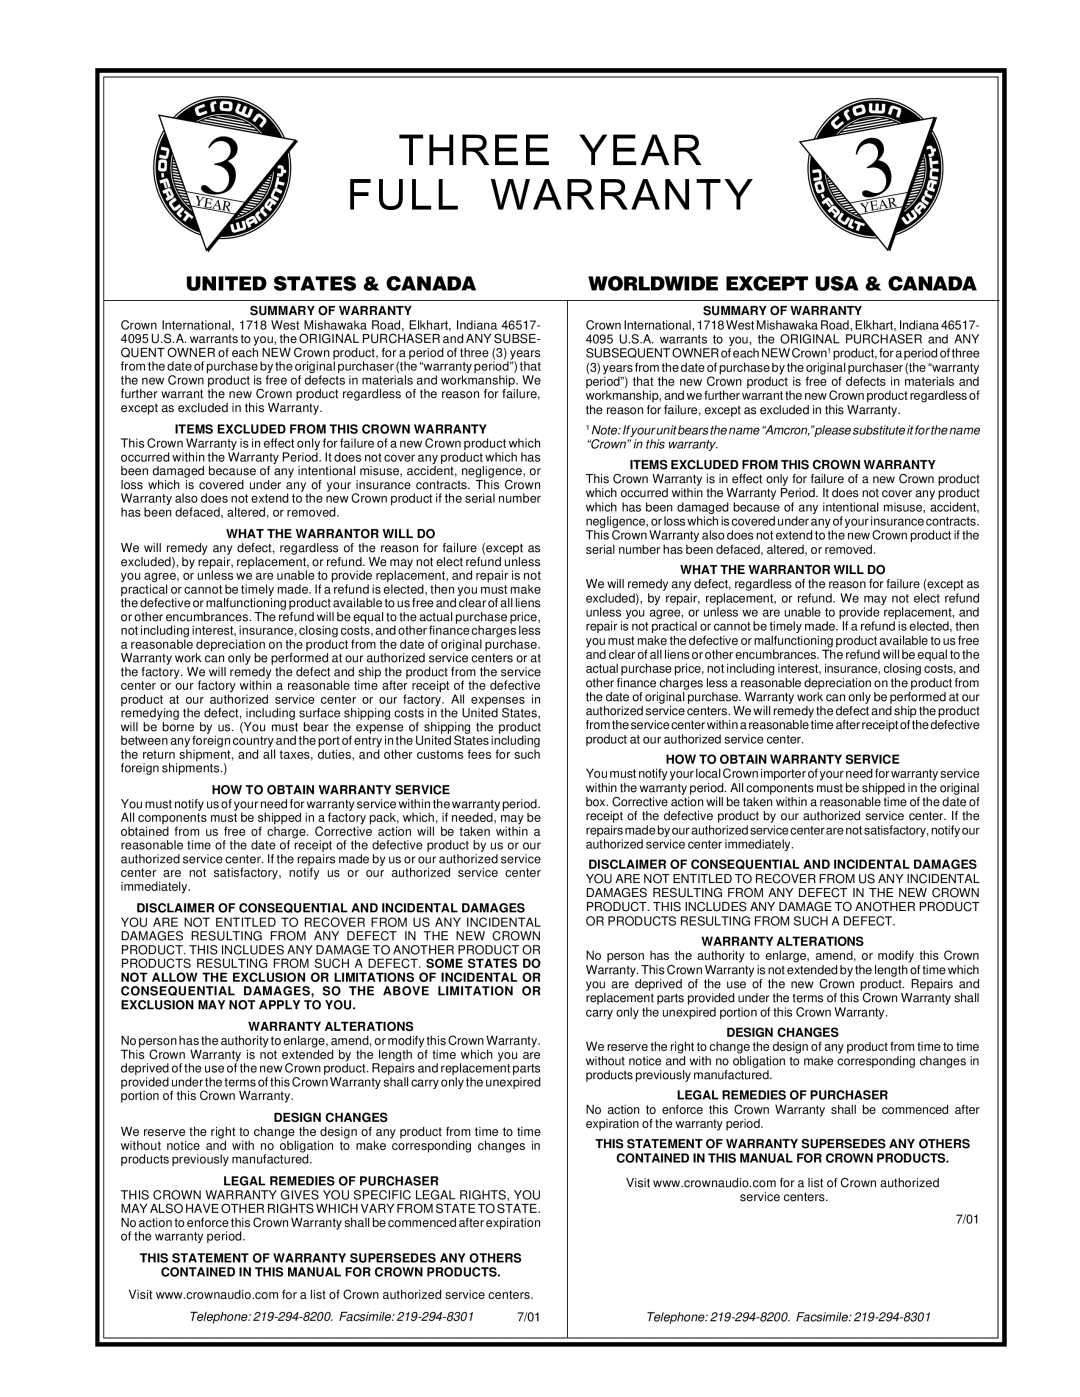 Crown Audio 21100 user manual Three Year Full Warranty, United States & Canada, Worldwide Except Usa & Canada, 7/01 